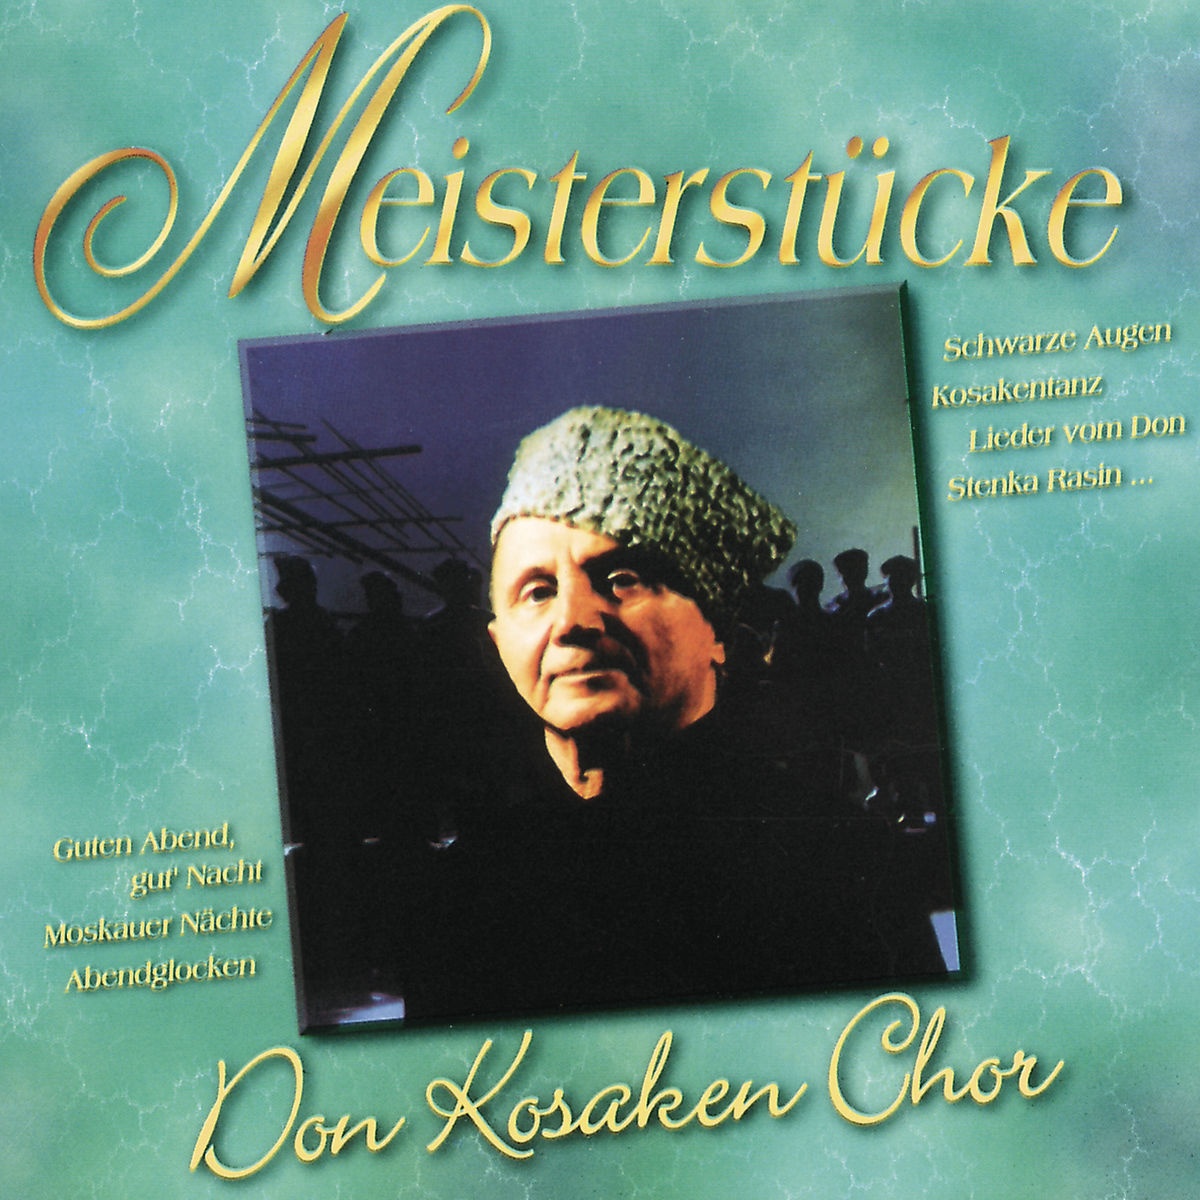 Meisterstucke - Don Kosaken Chor. (CD)